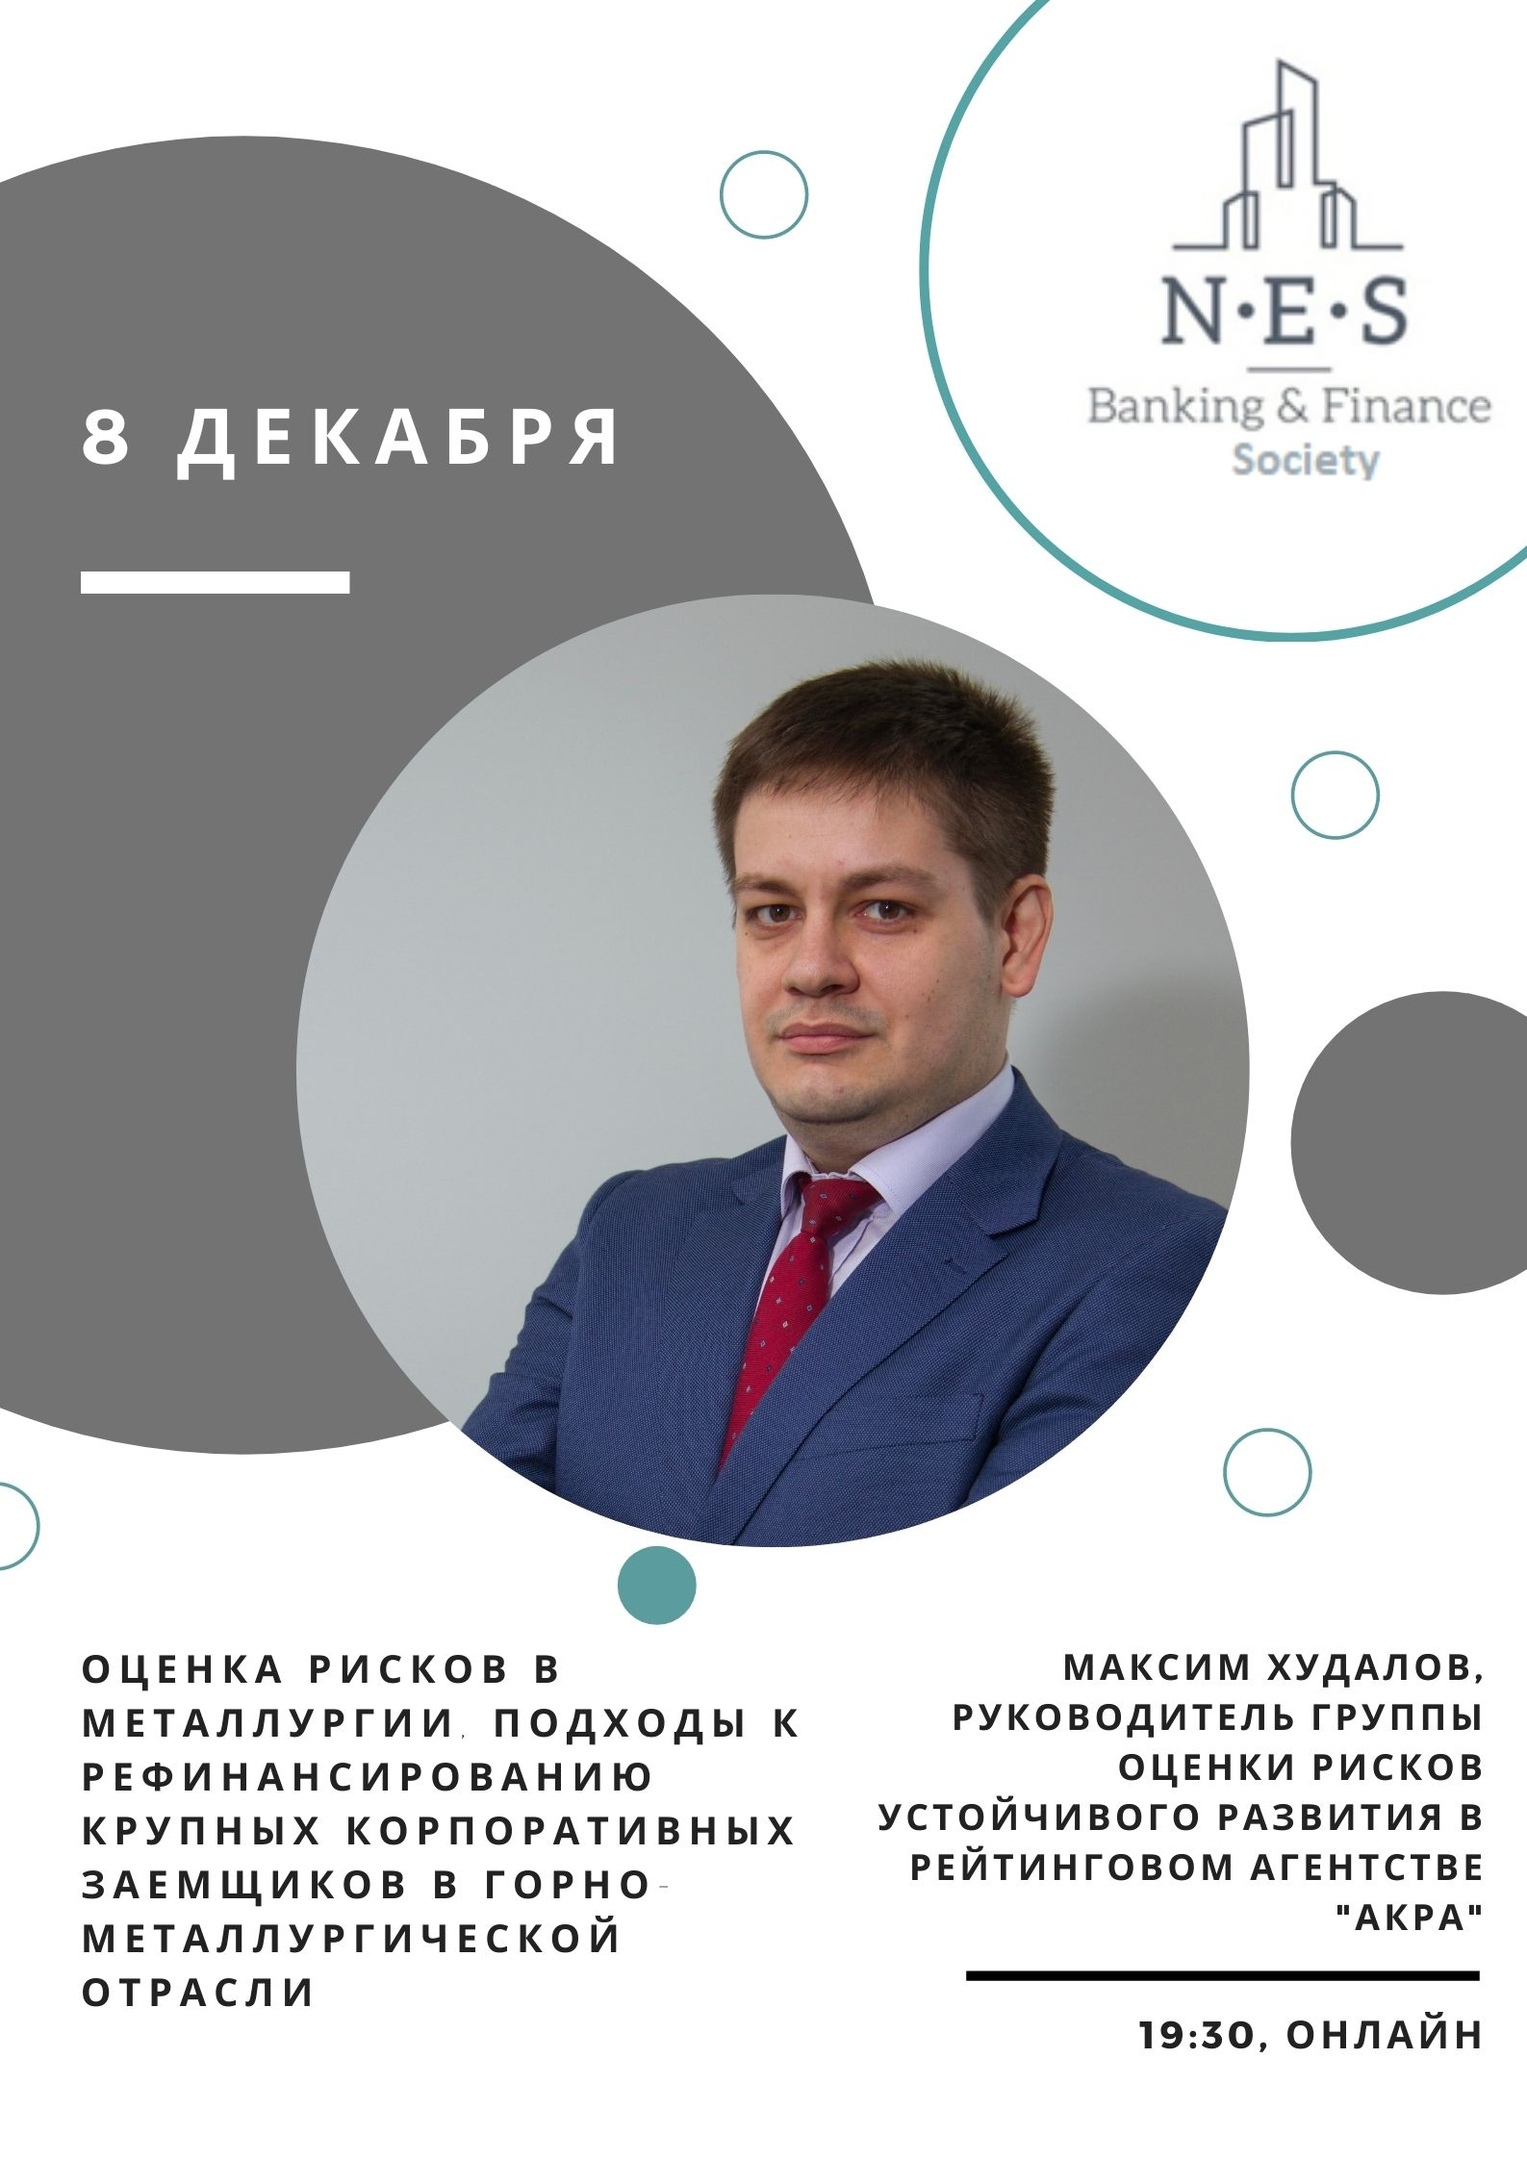 Maxim Khudalov – sustainable development risk valuation department head, AKRA